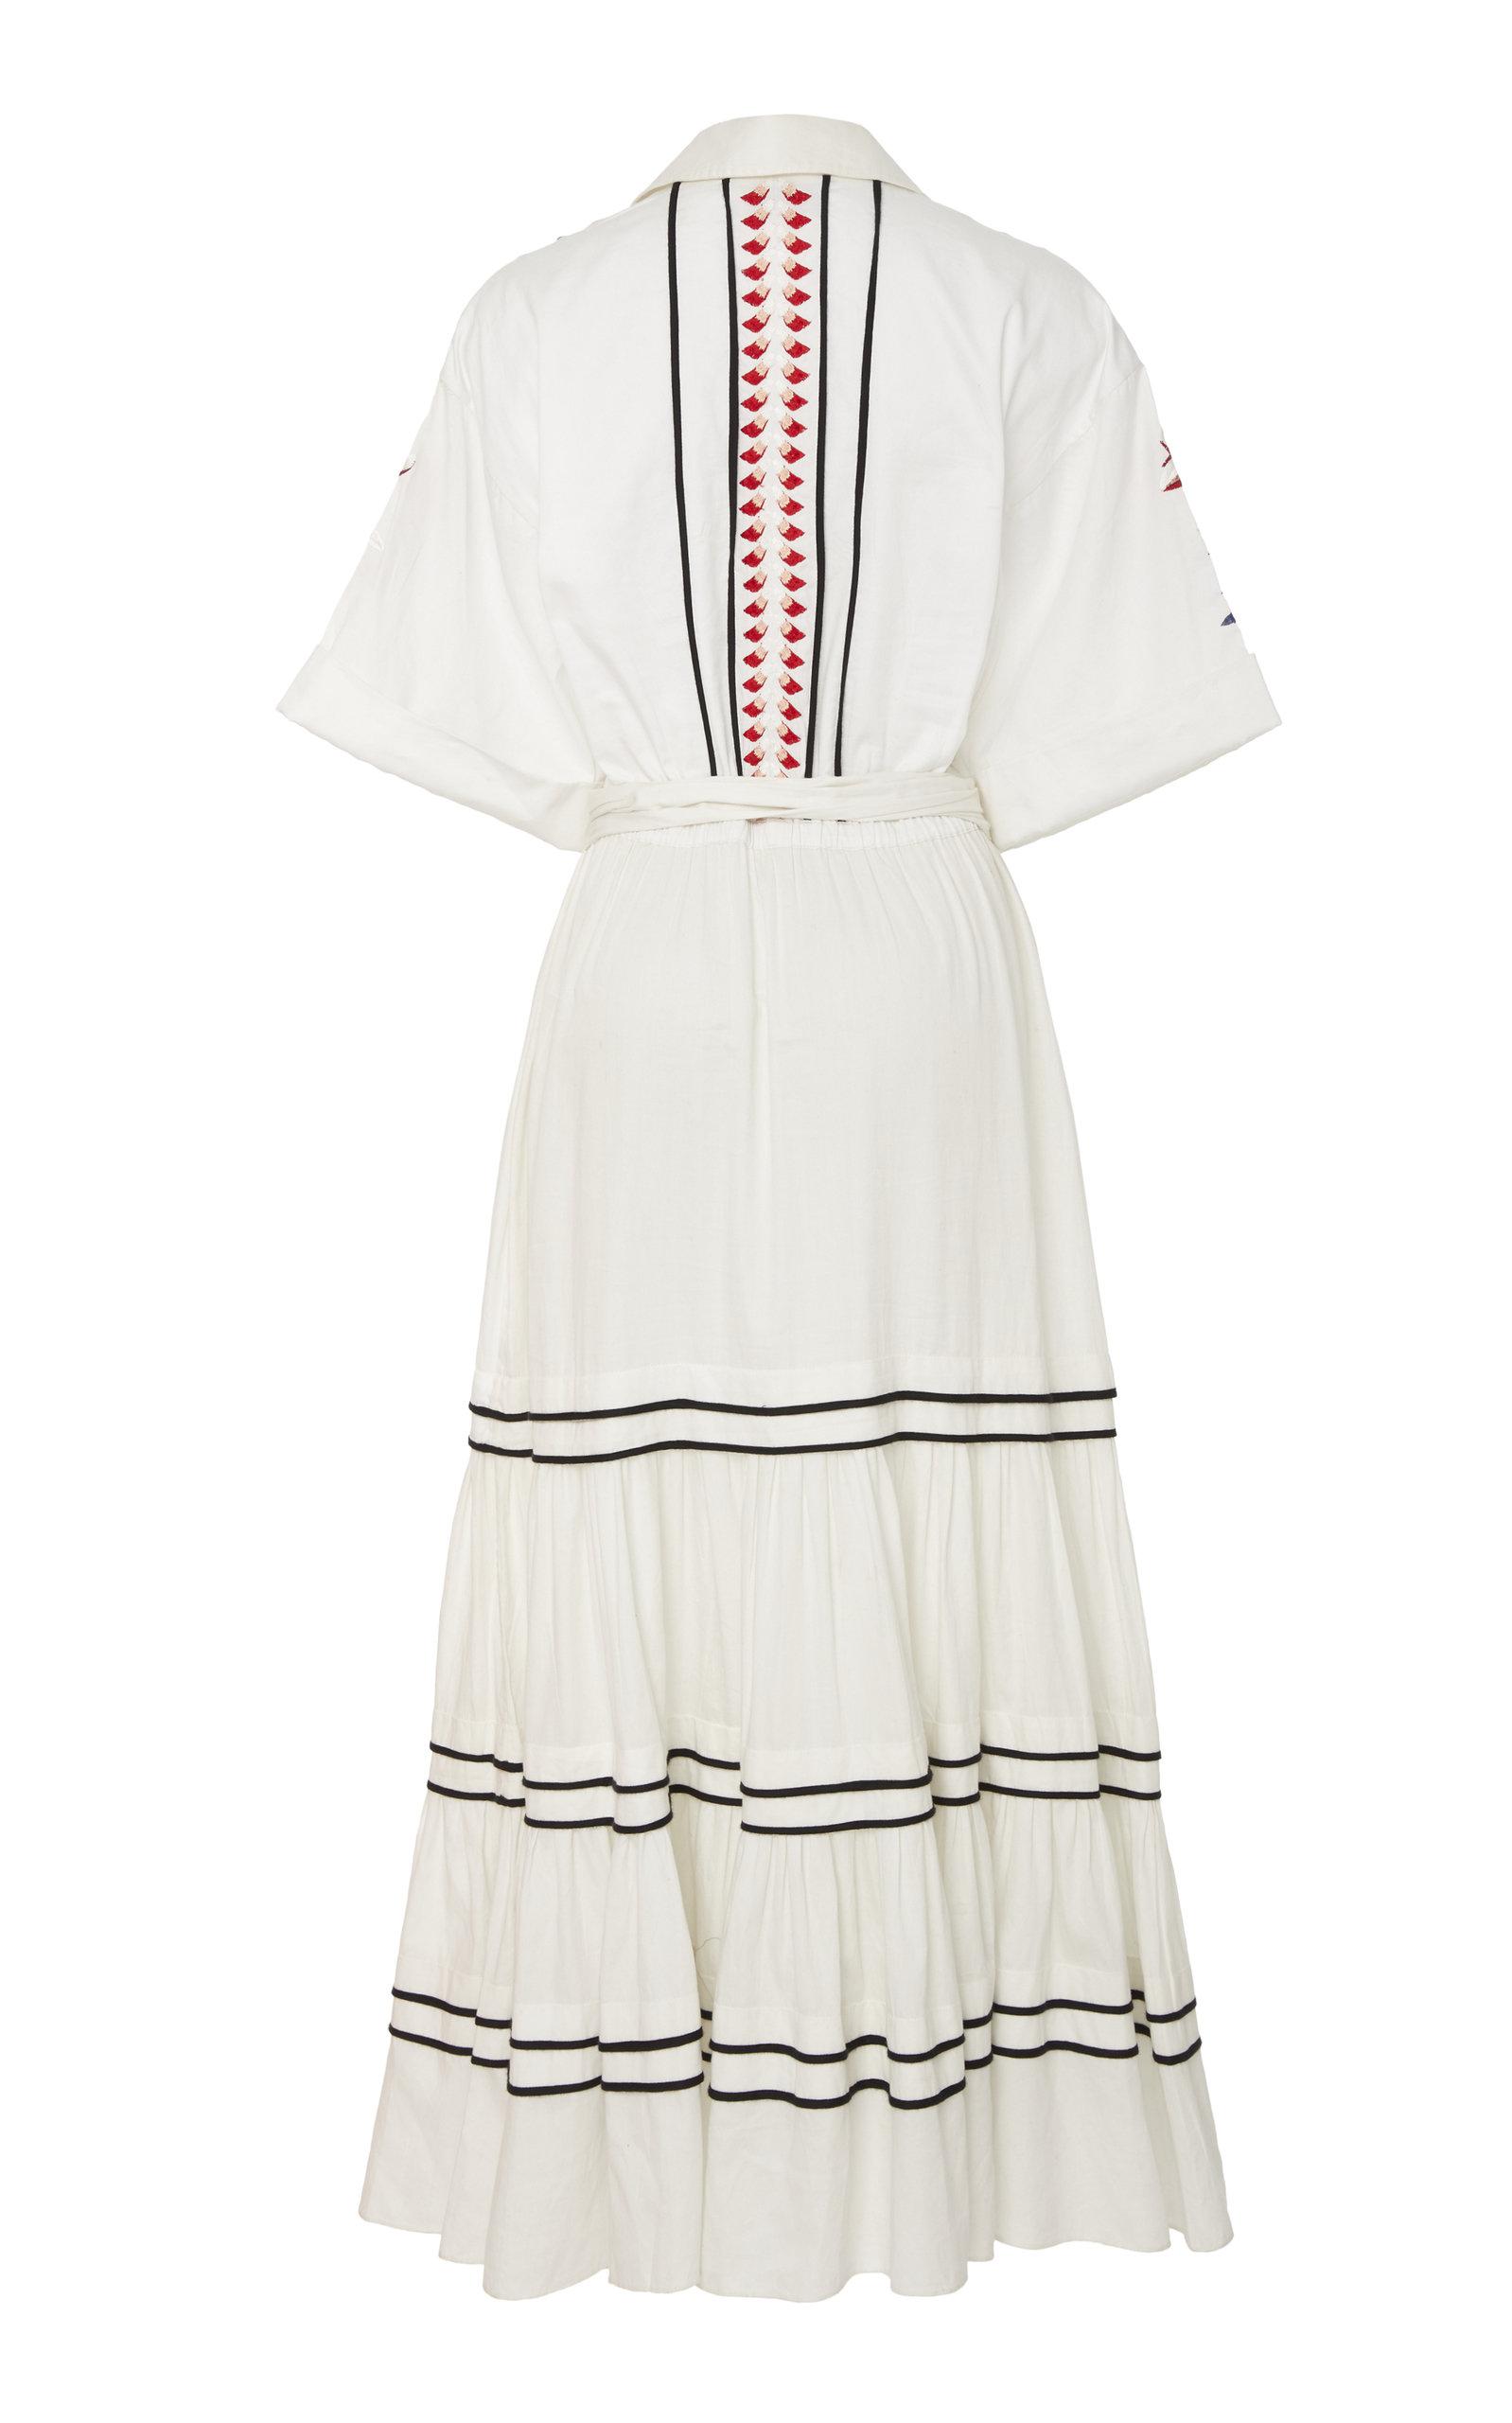 Lyst - Temperley London Cherry Blossom Cotton Dress in White